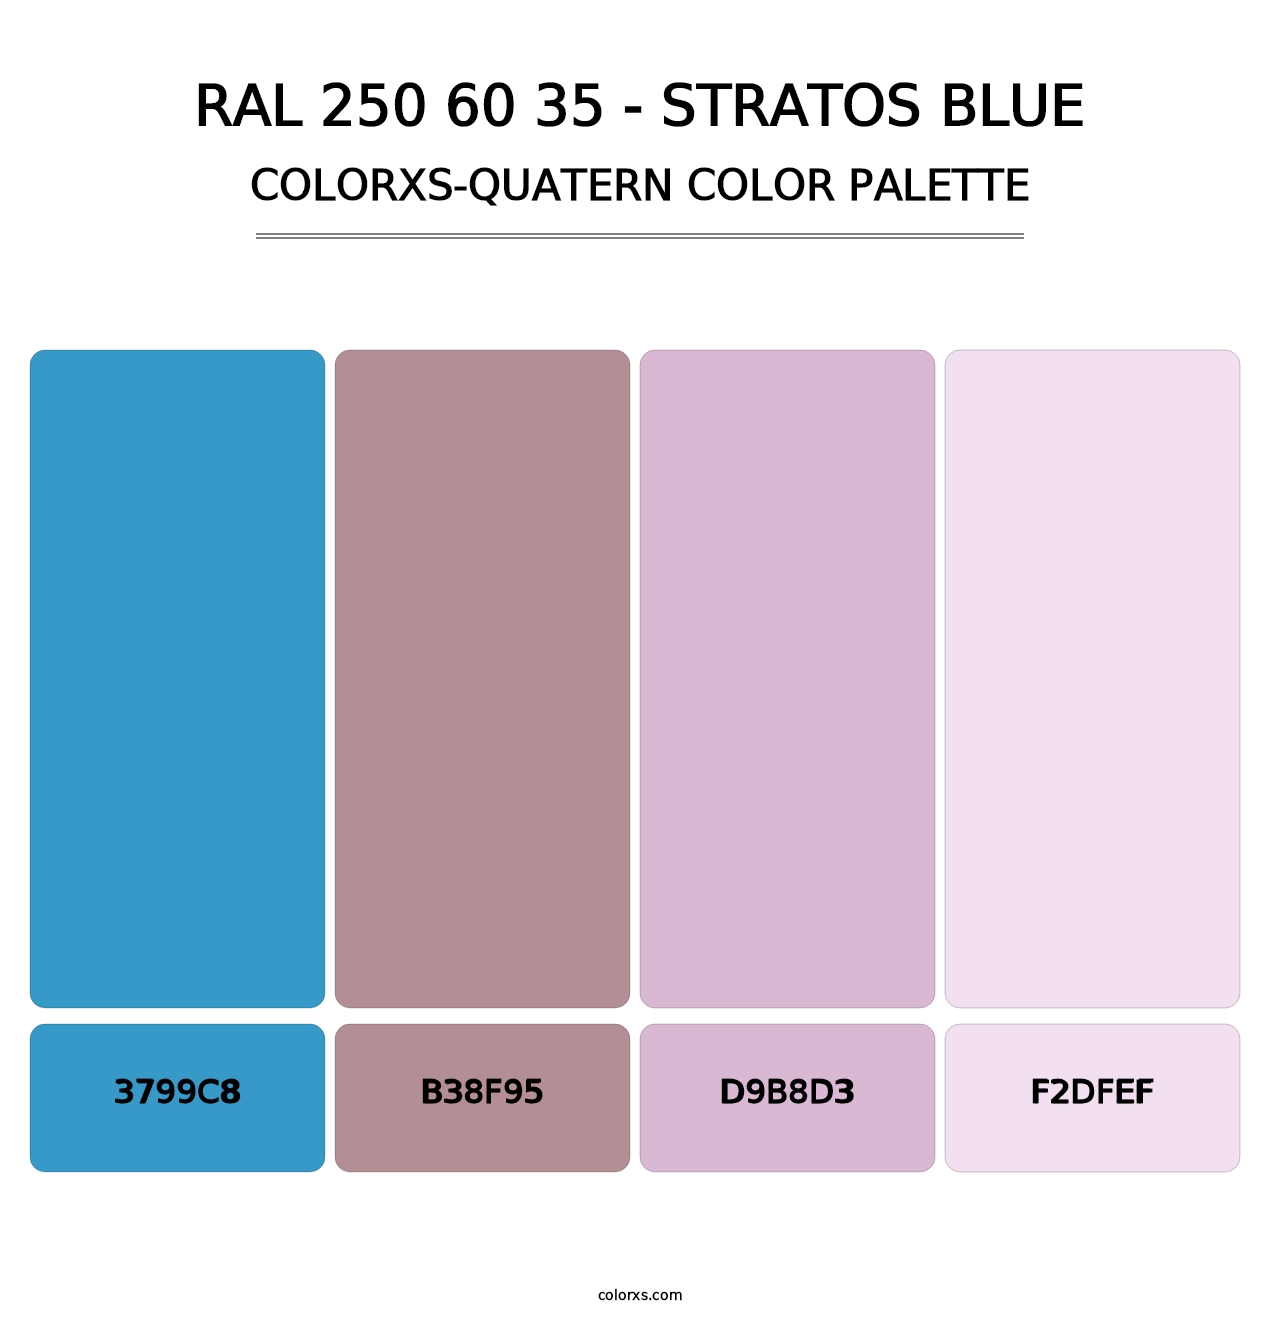 RAL 250 60 35 - Stratos Blue - Colorxs Quatern Palette